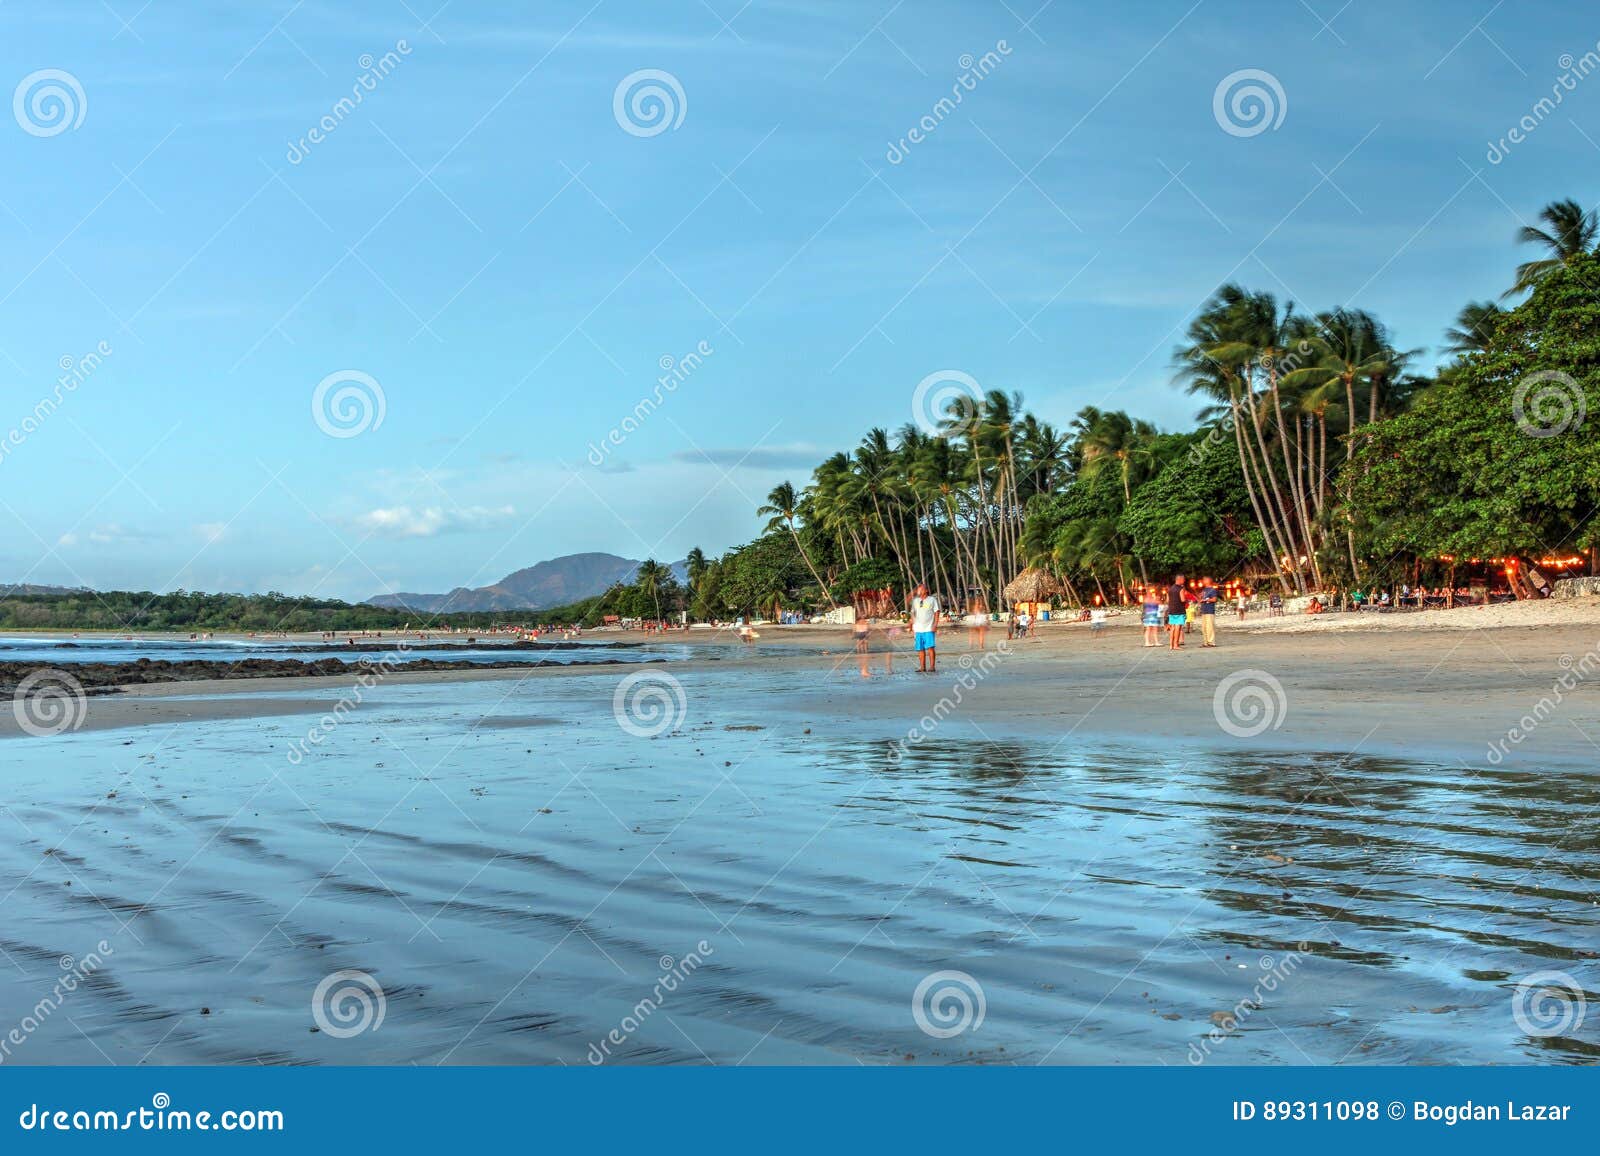 tamarindo beach, costa rica